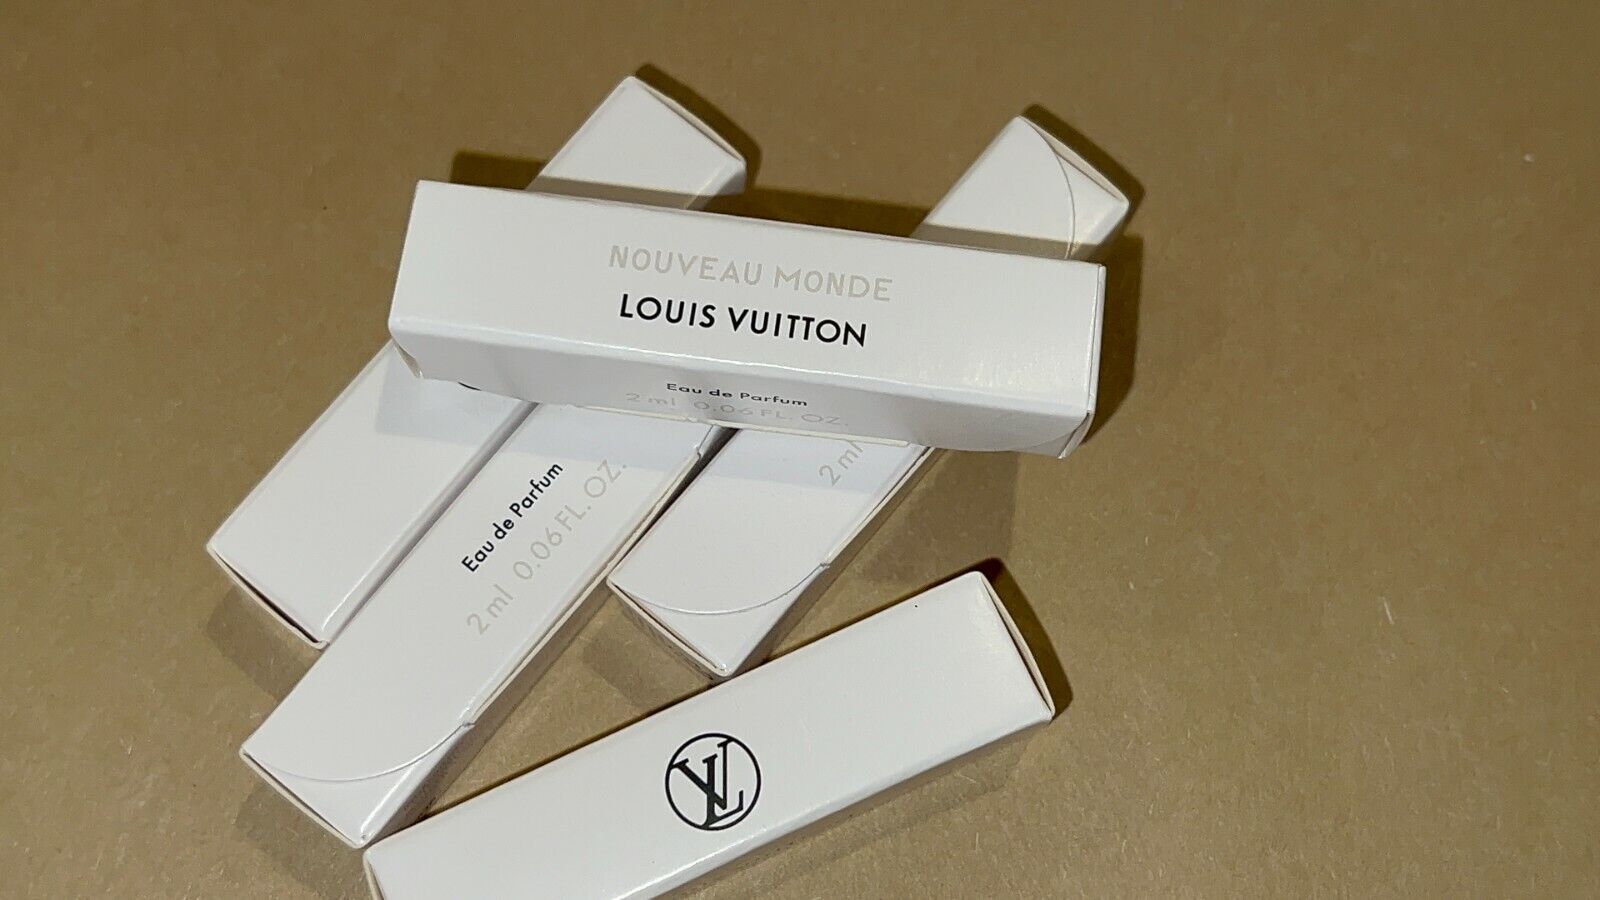 Louis Vuitton Nuit De Feu Eau De Parfum 2ml Sample Spray NIB